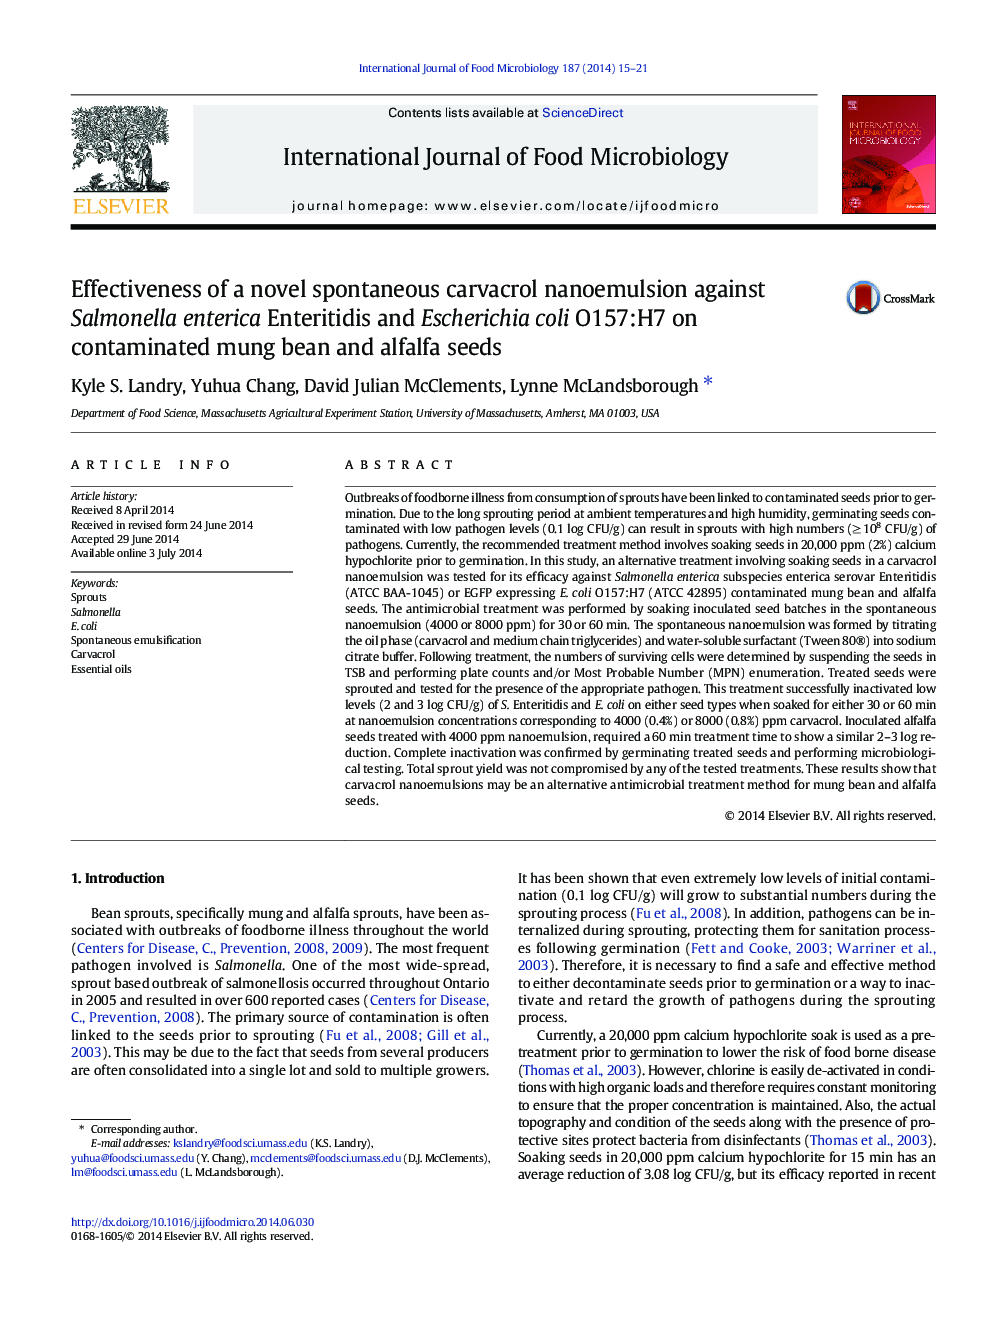 Effectiveness of a novel spontaneous carvacrol nanoemulsion against Salmonella enterica Enteritidis and Escherichia coli O157:H7 on contaminated mung bean and alfalfa seeds